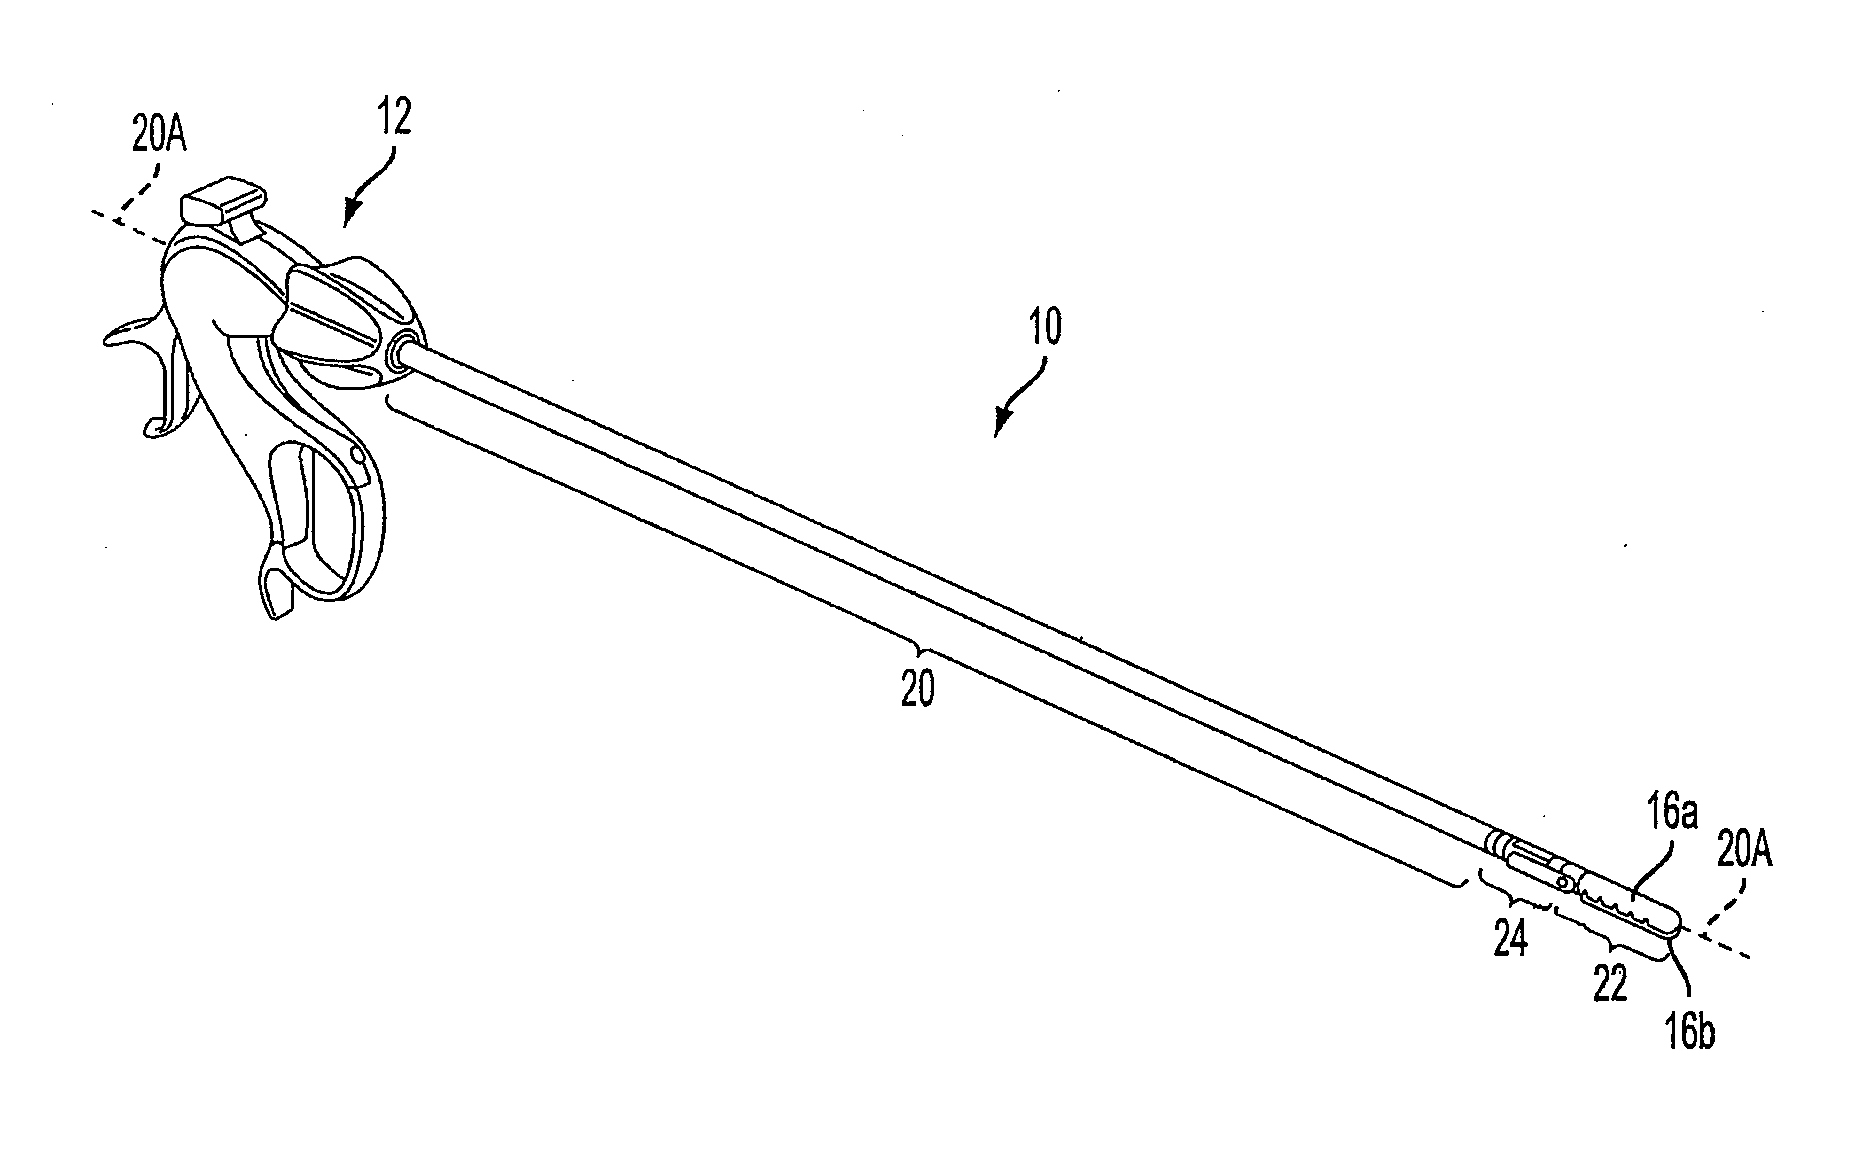 Laparoscopic devices with flexible actuation mechanisms